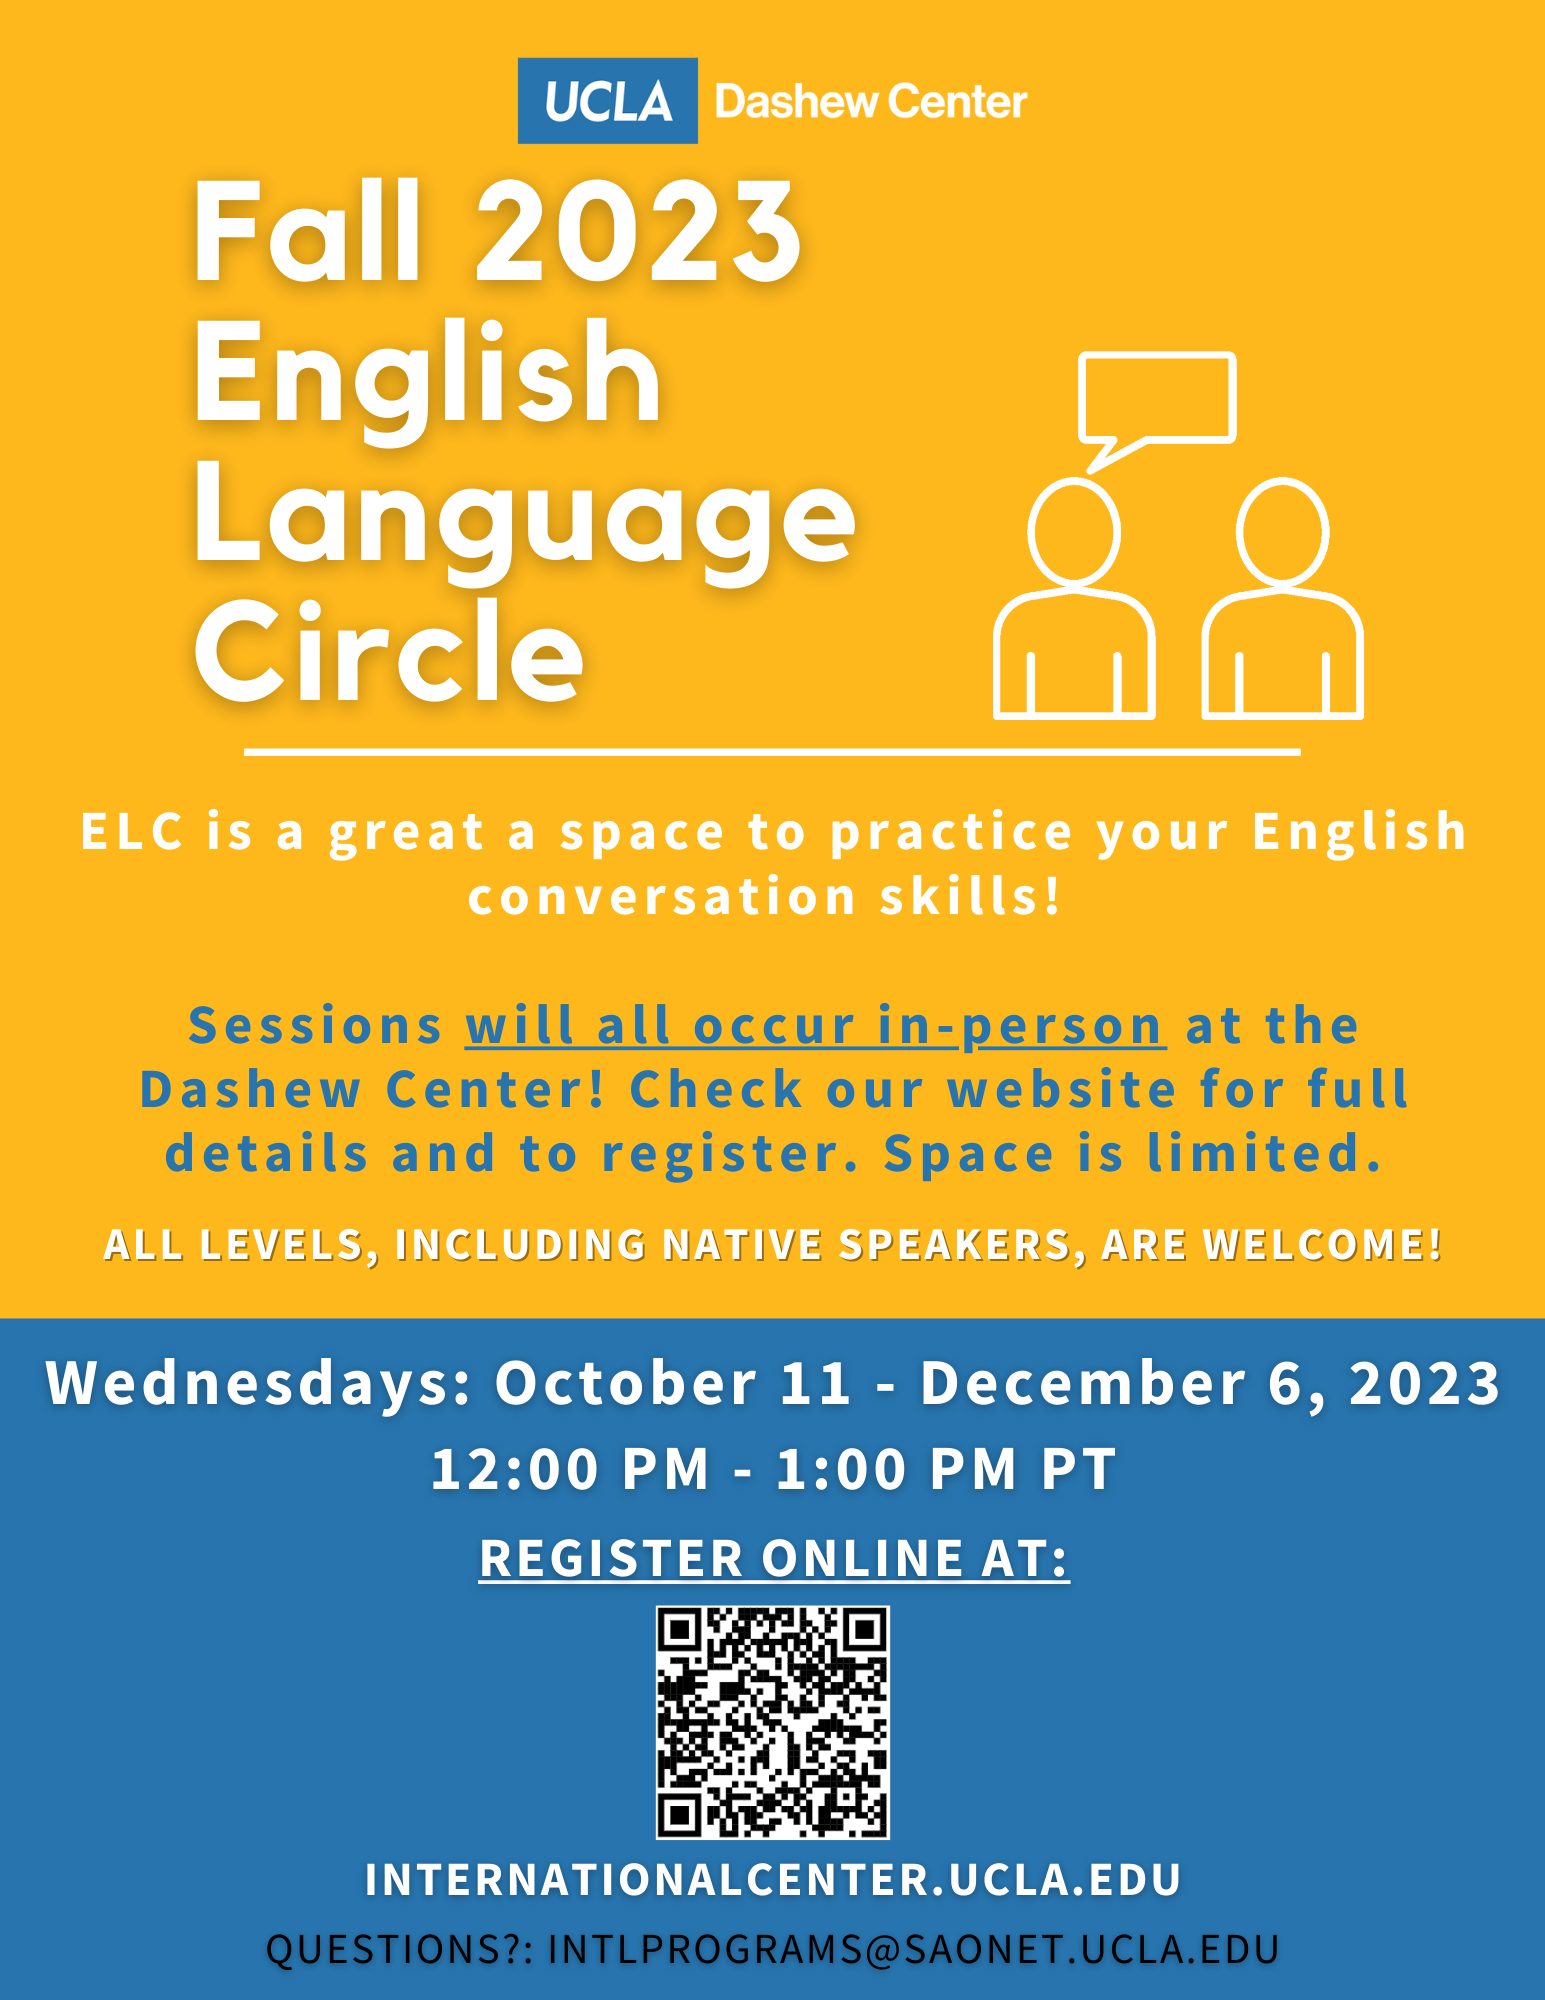 Fall 23 English Language Circle flyer